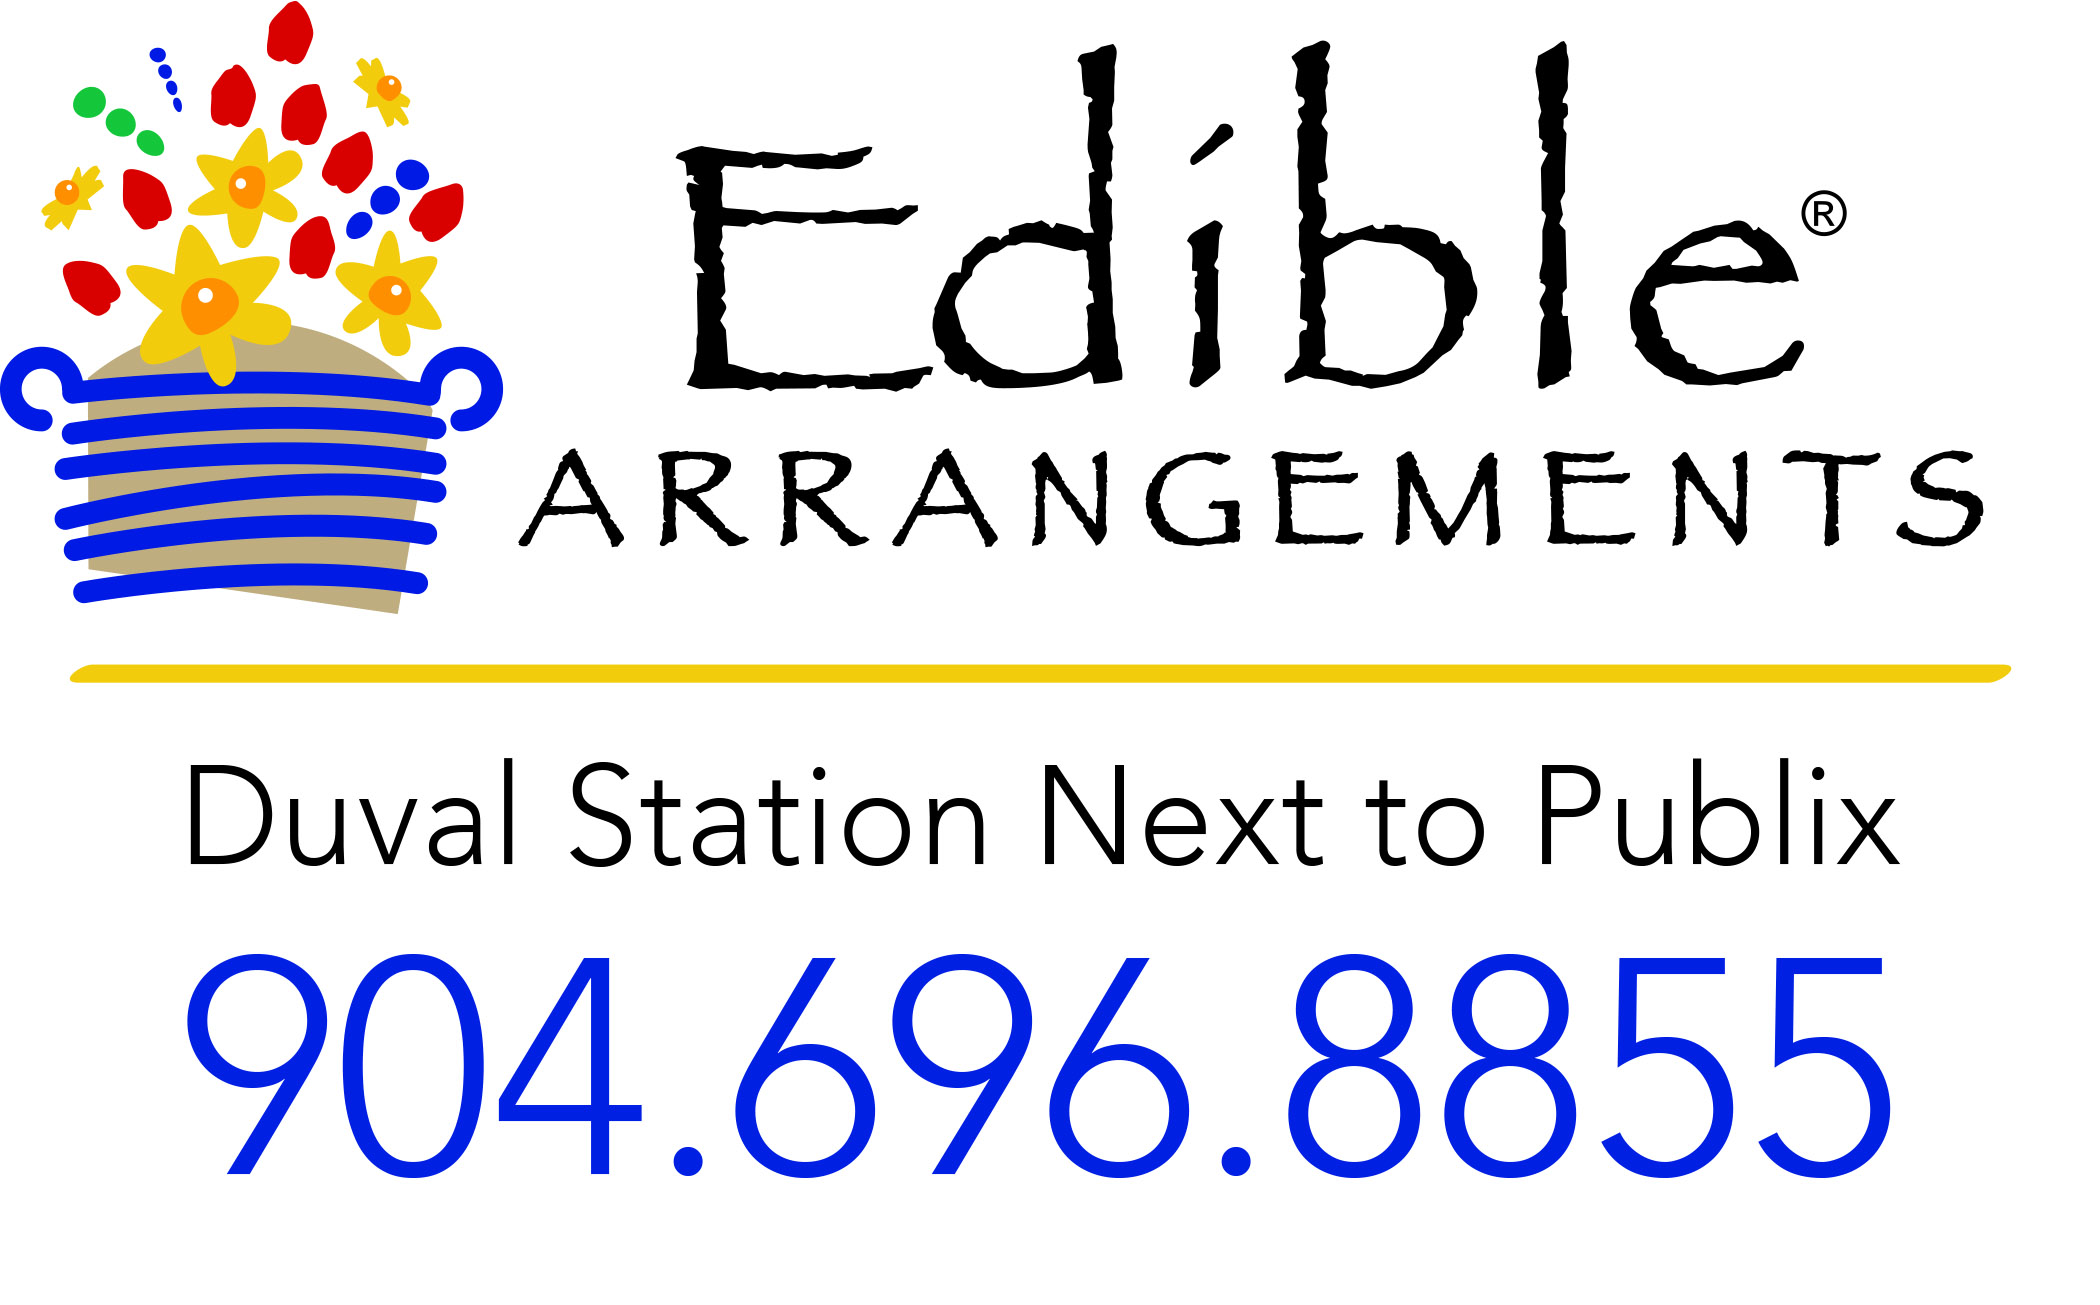 EdibleArrangements_Duval2